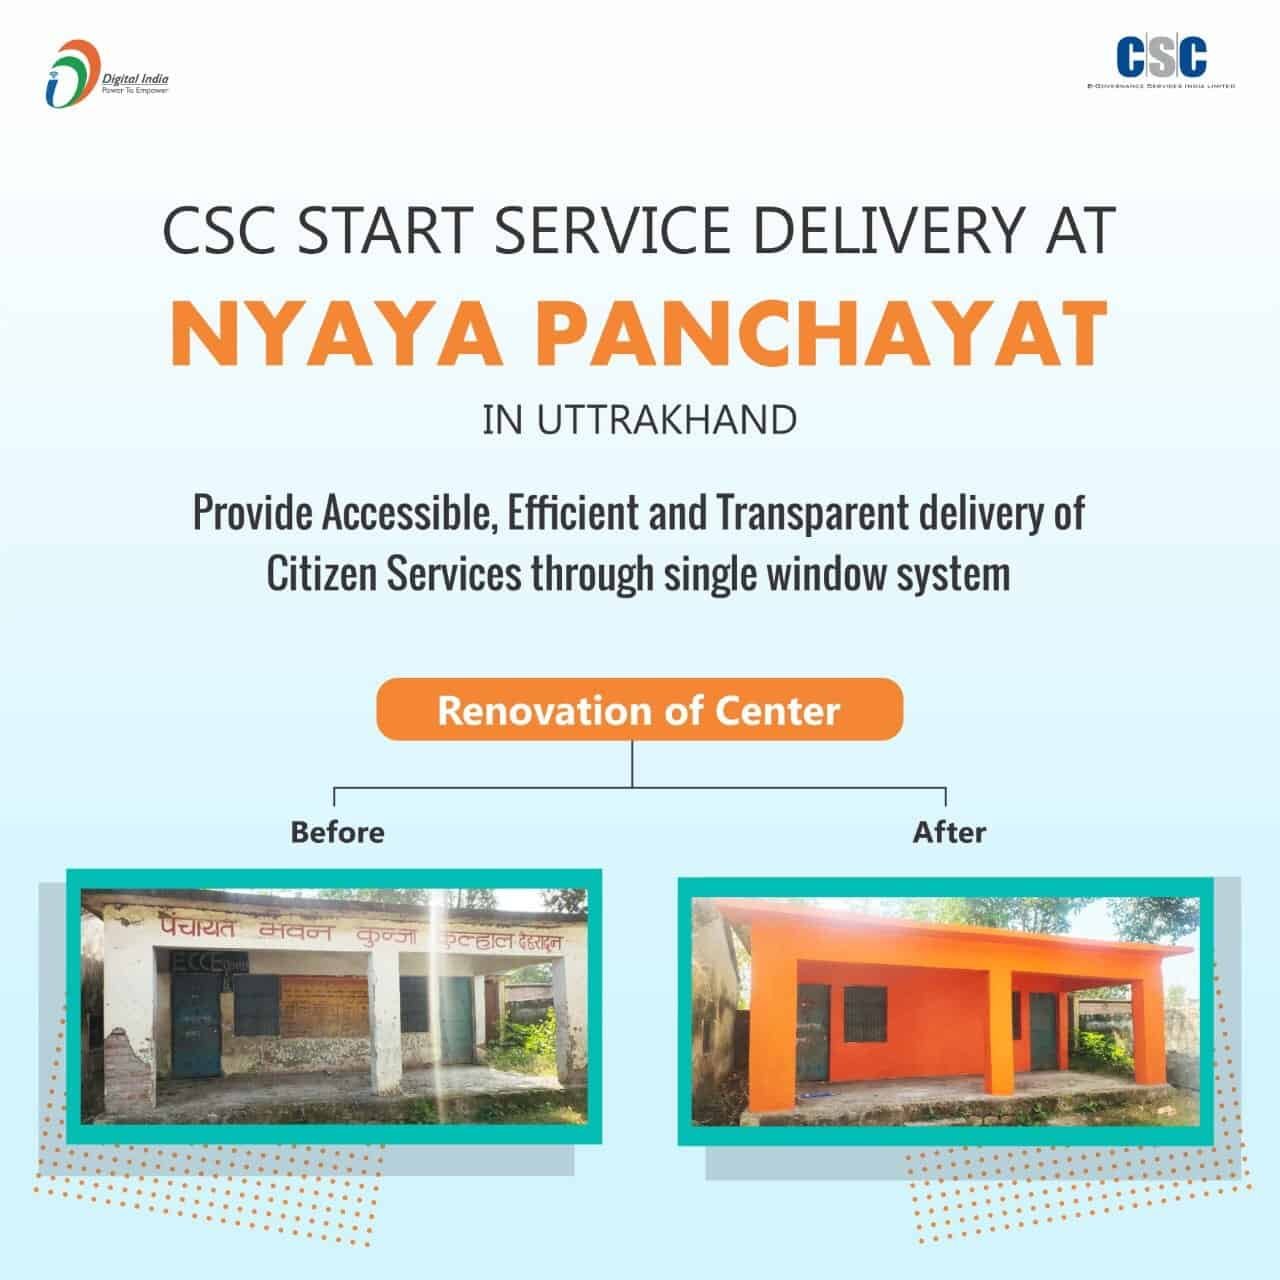 CSC Starts Services delivery at Nyay panchayat, renovation of panchayat bhavan through csc vle society